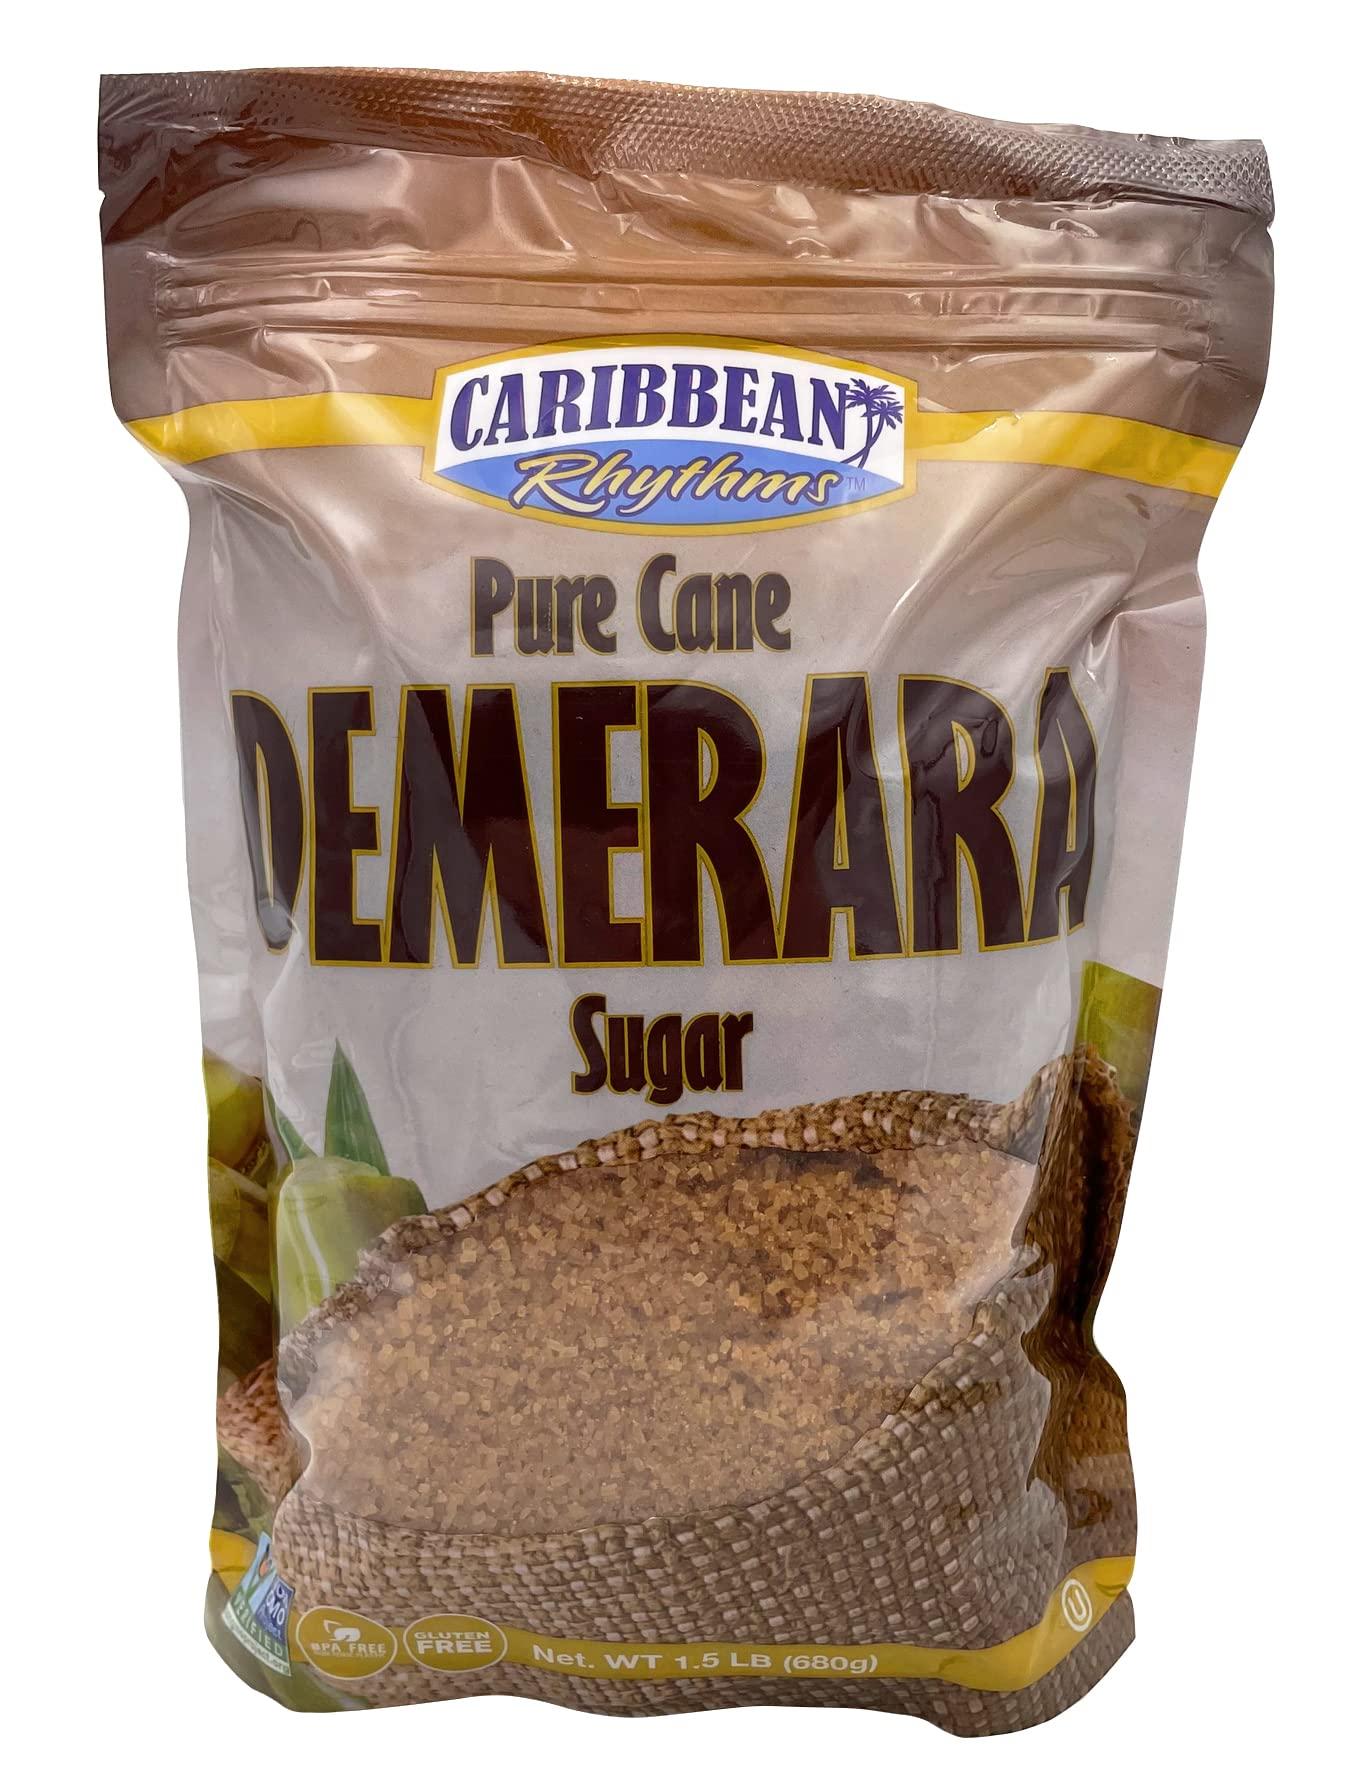 demerara gold sugar